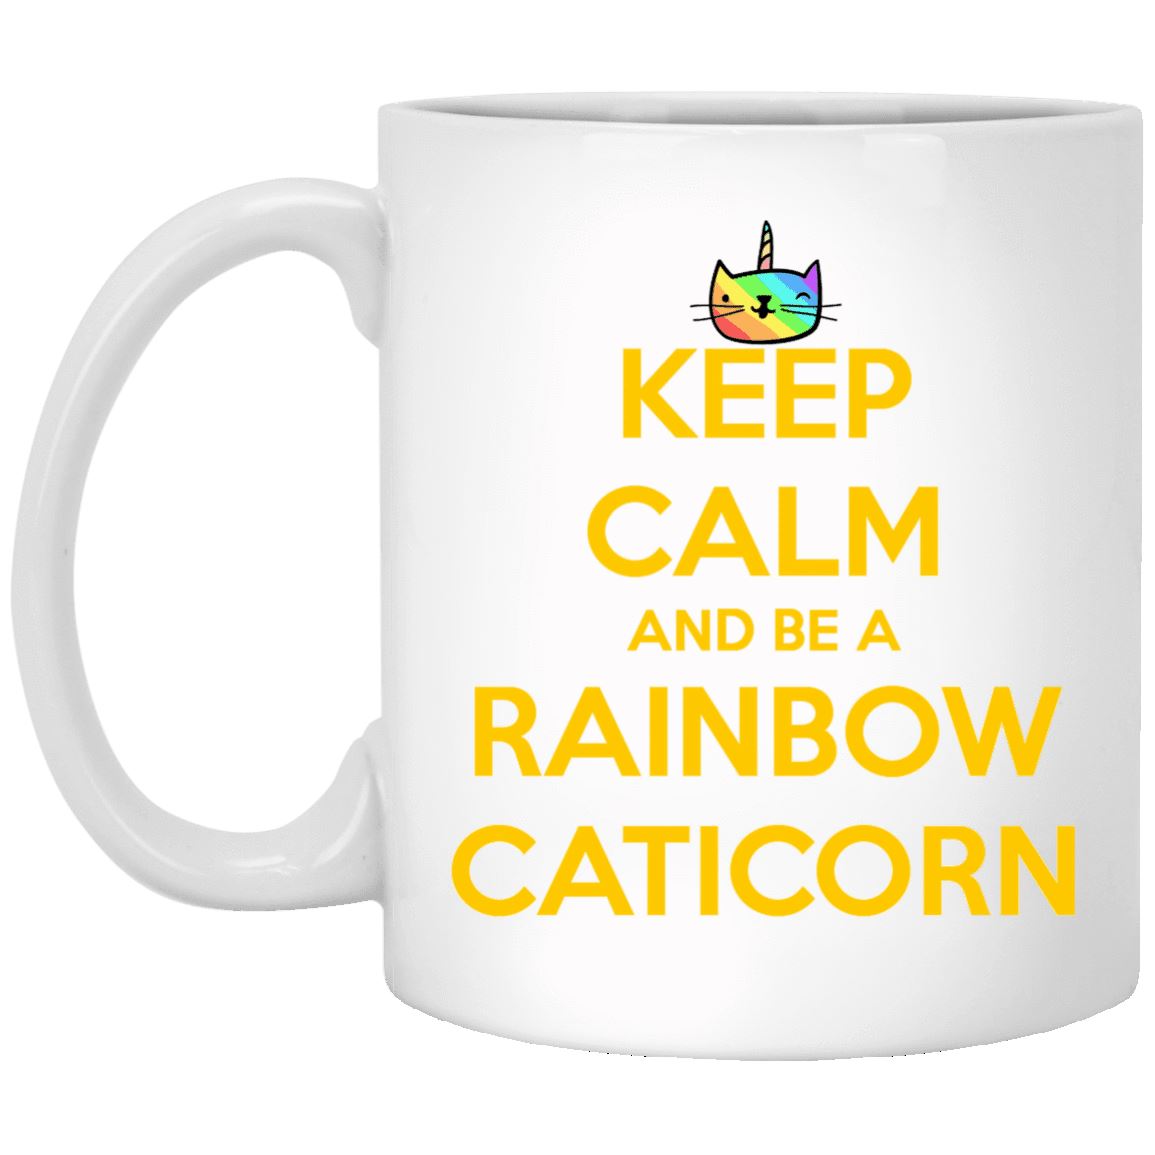 Cat Mug - Keep Calm And Be A Rainbow Caticorn - CatsForLife